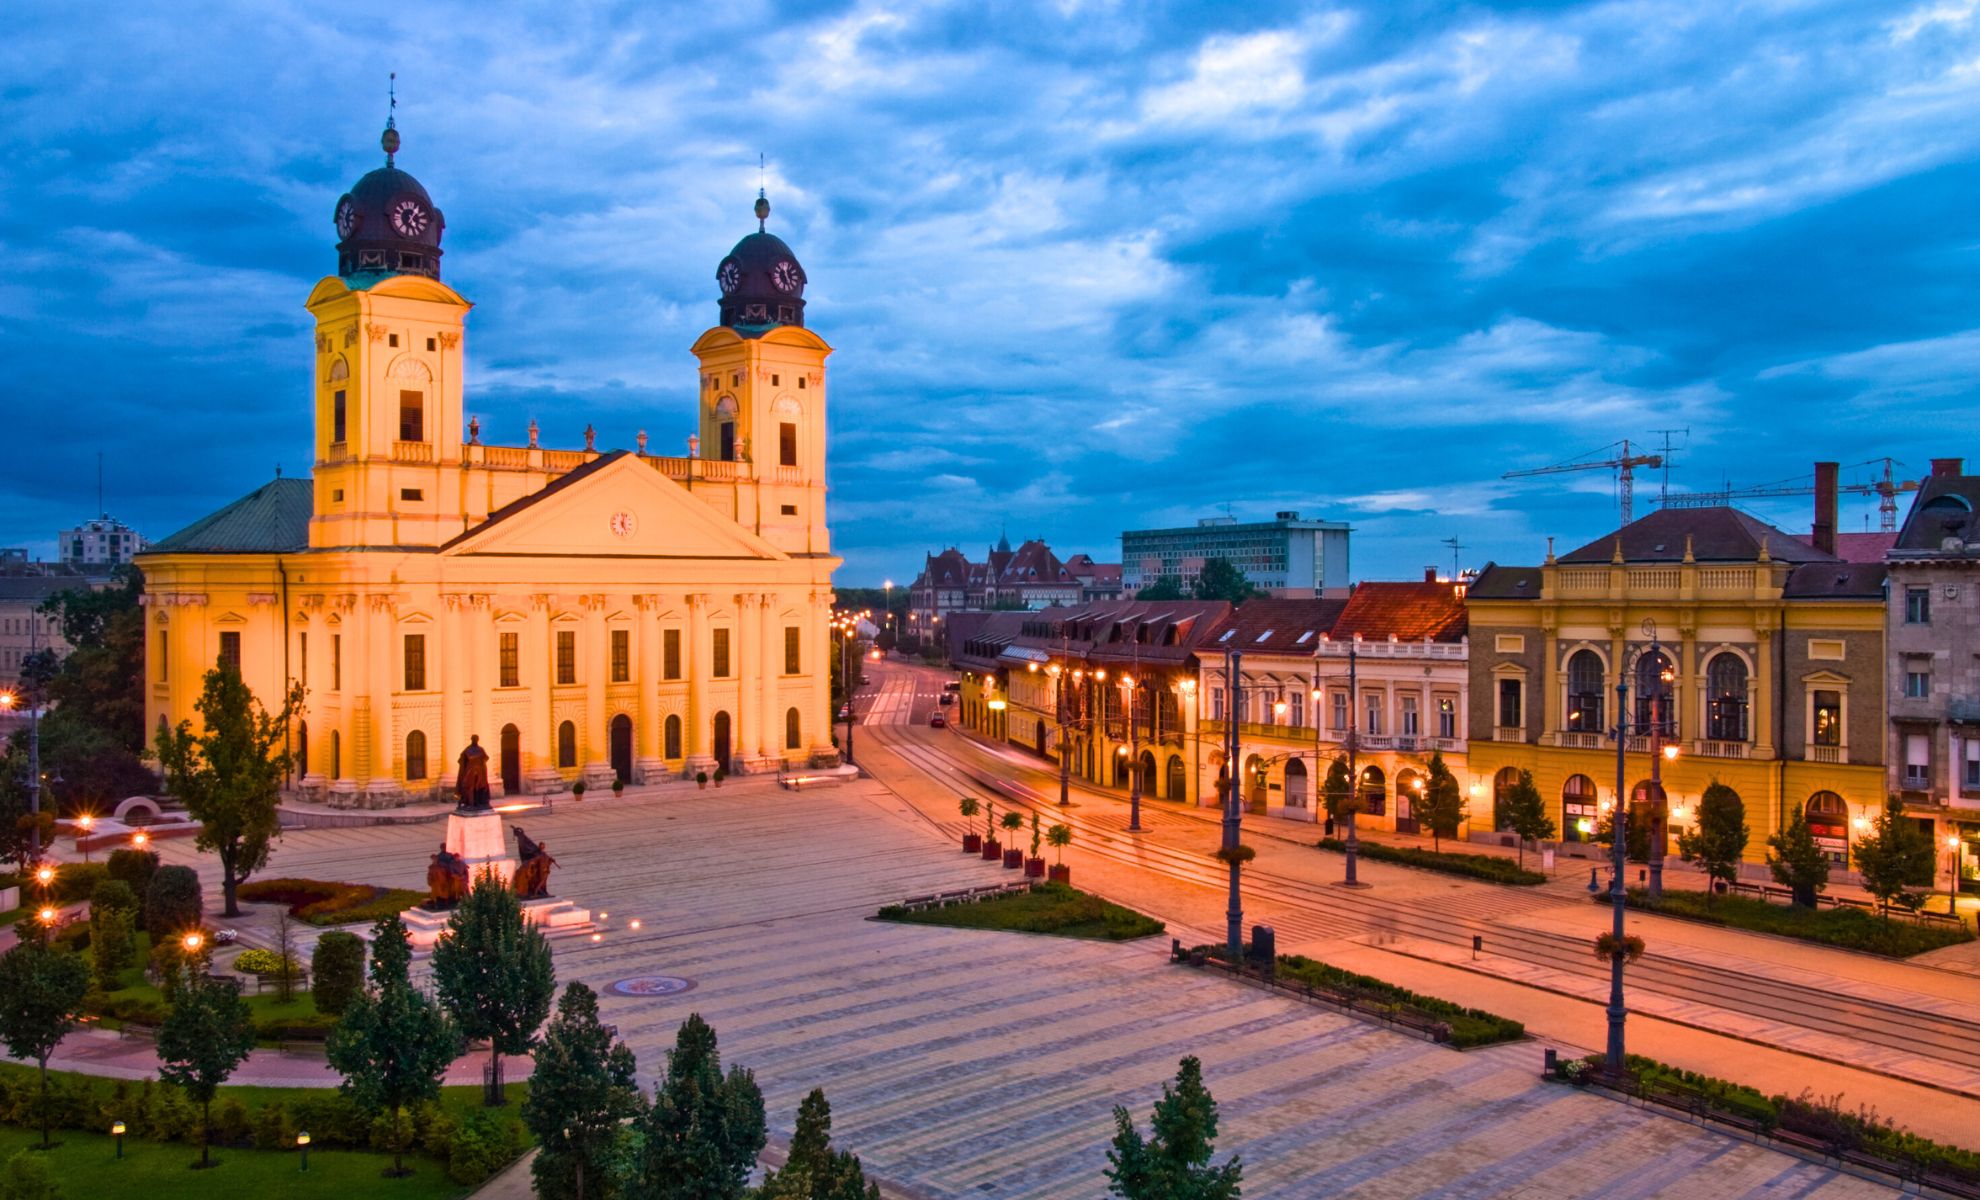 La ville de Debrecen, Hongrie